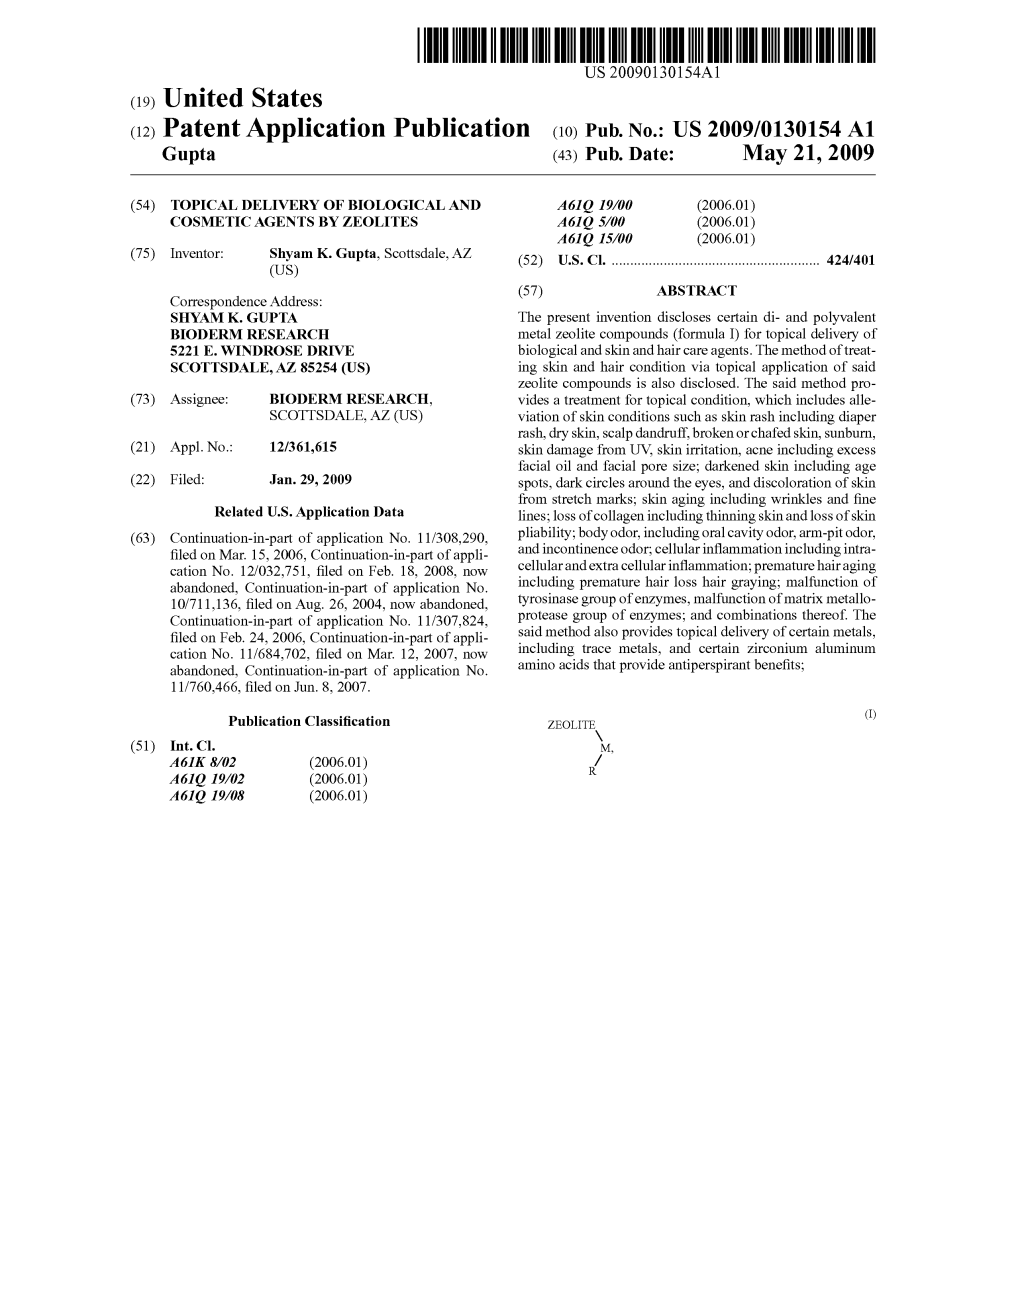 (12) Patent Application Publication (10) Pub. No.: US 2009/0130154 A1 Gupta (43) Pub